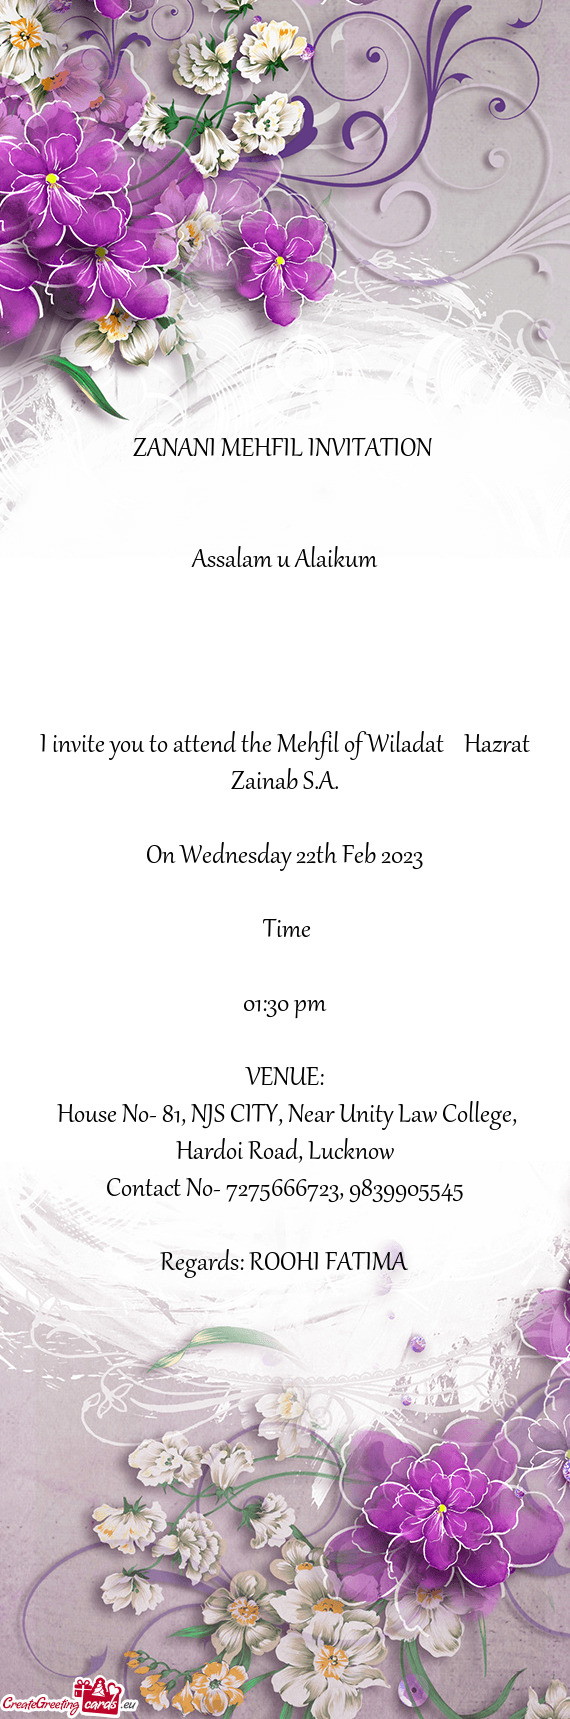 ZANANI MEHFIL INVITATION